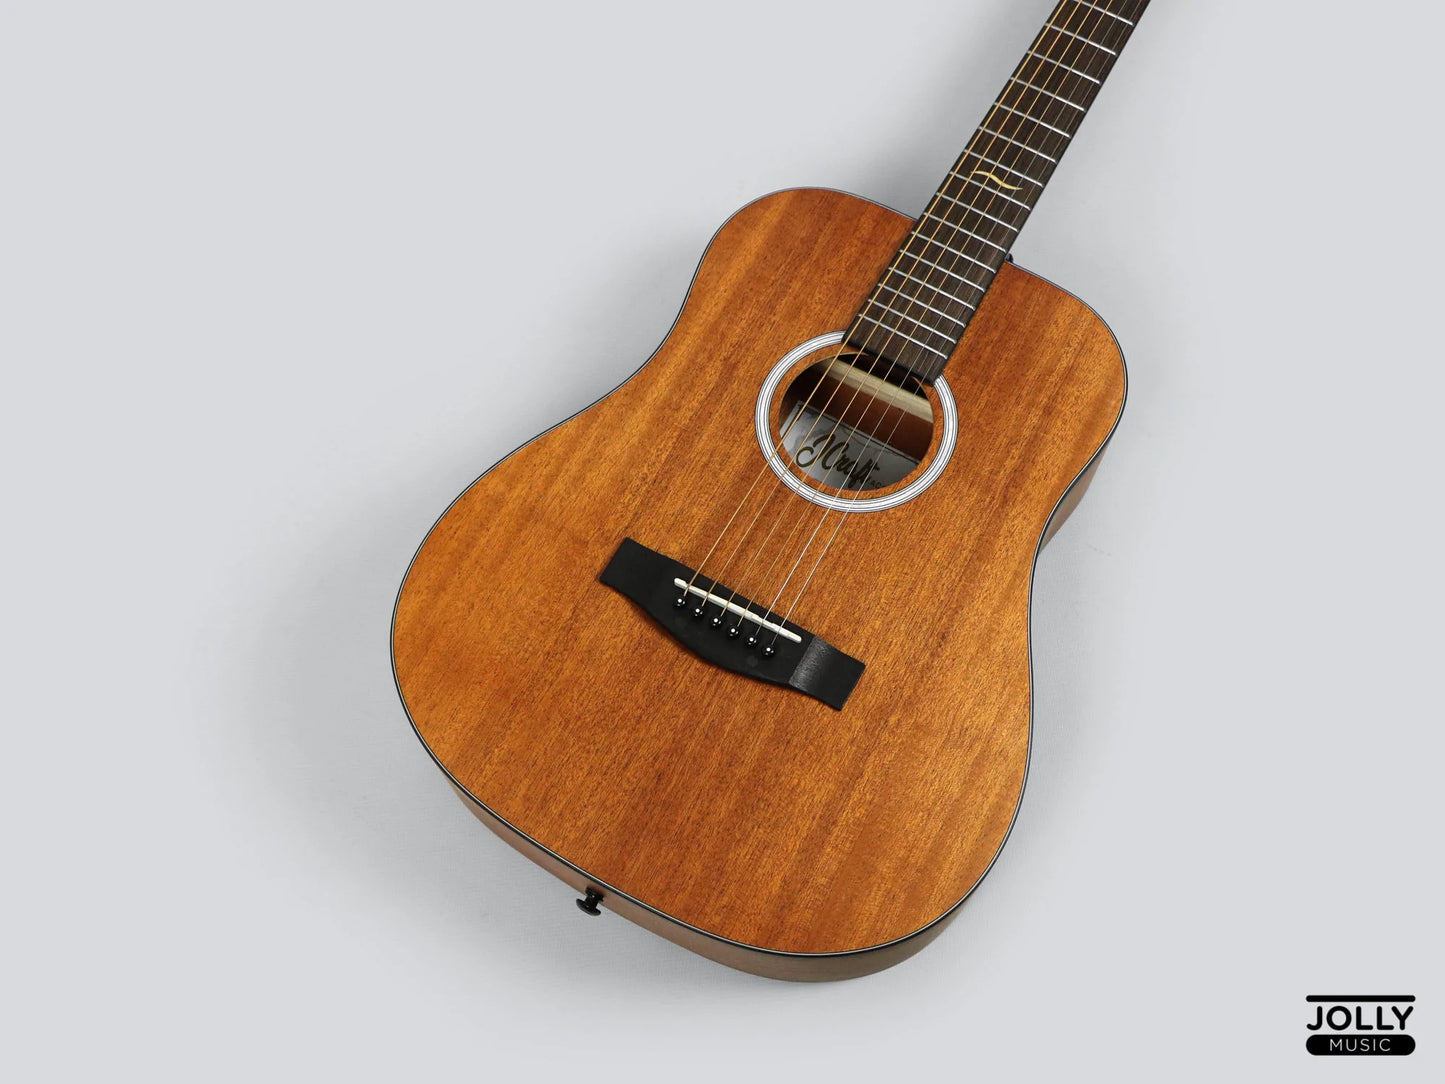 JCraft Troubadour Taka Mini Little Dreadnought All-Mahogany 36" Acoustic Guitar with soft case